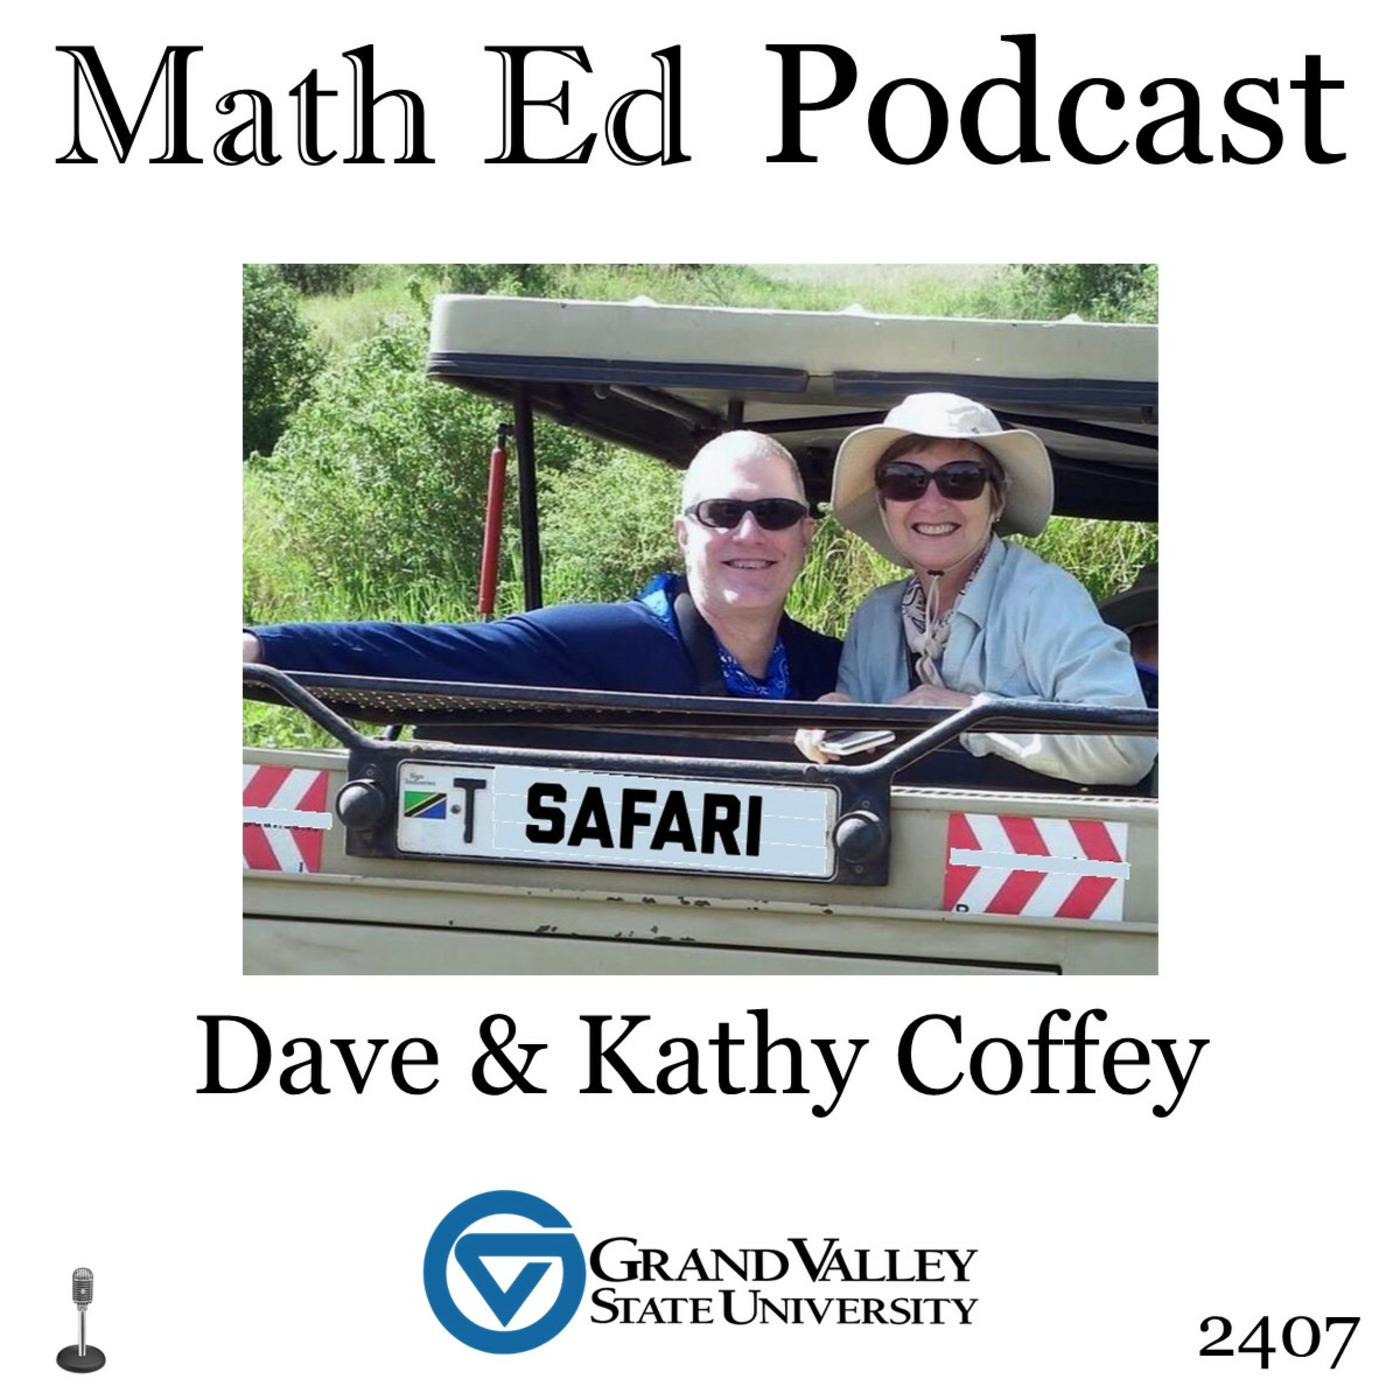 Episode 2407: David Coffey and Kathryn Coffey – Designing Math Adventures